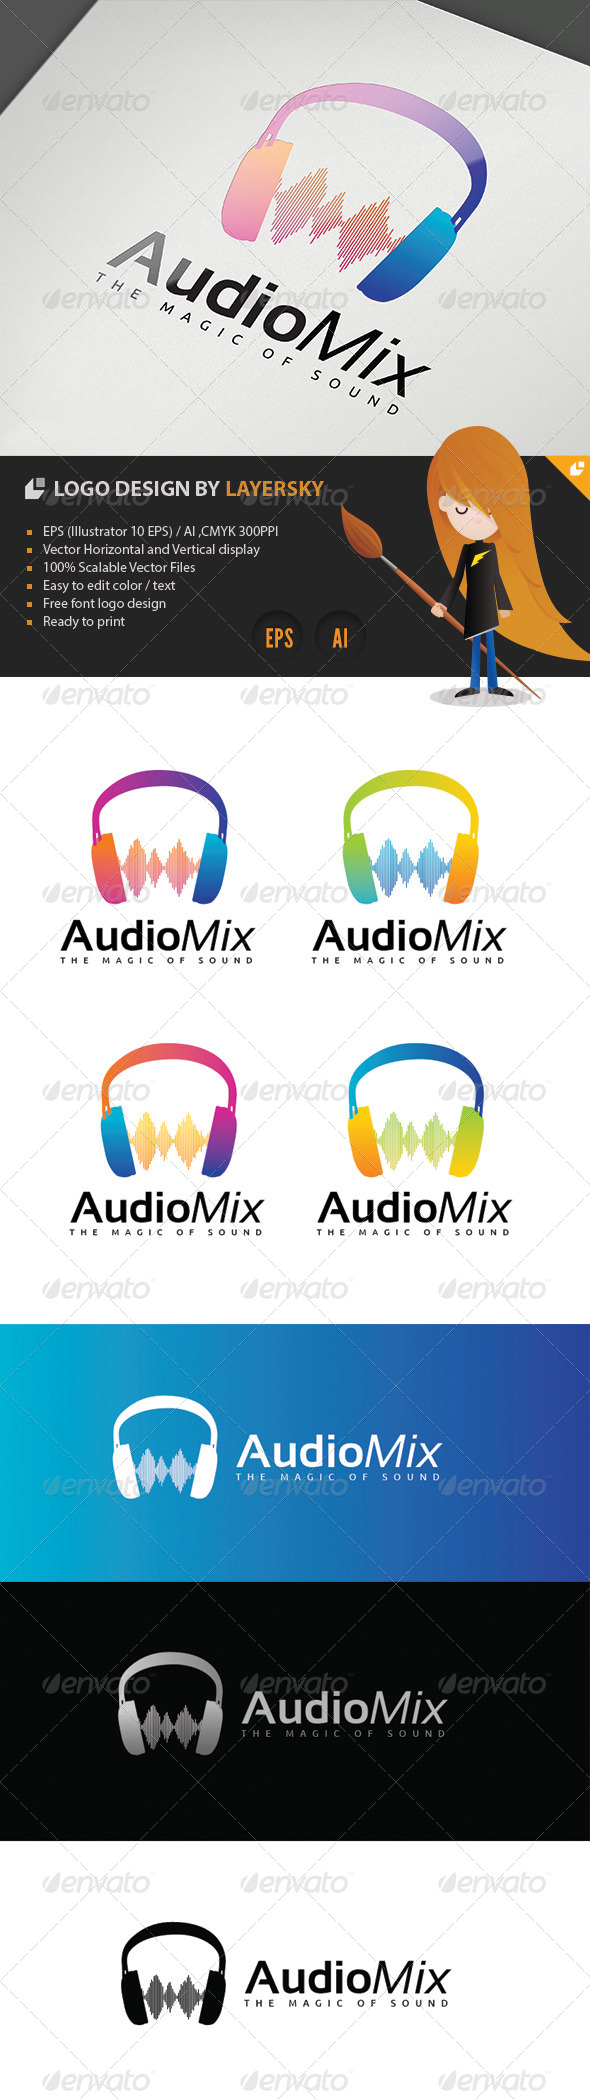 Audio Mix Logo